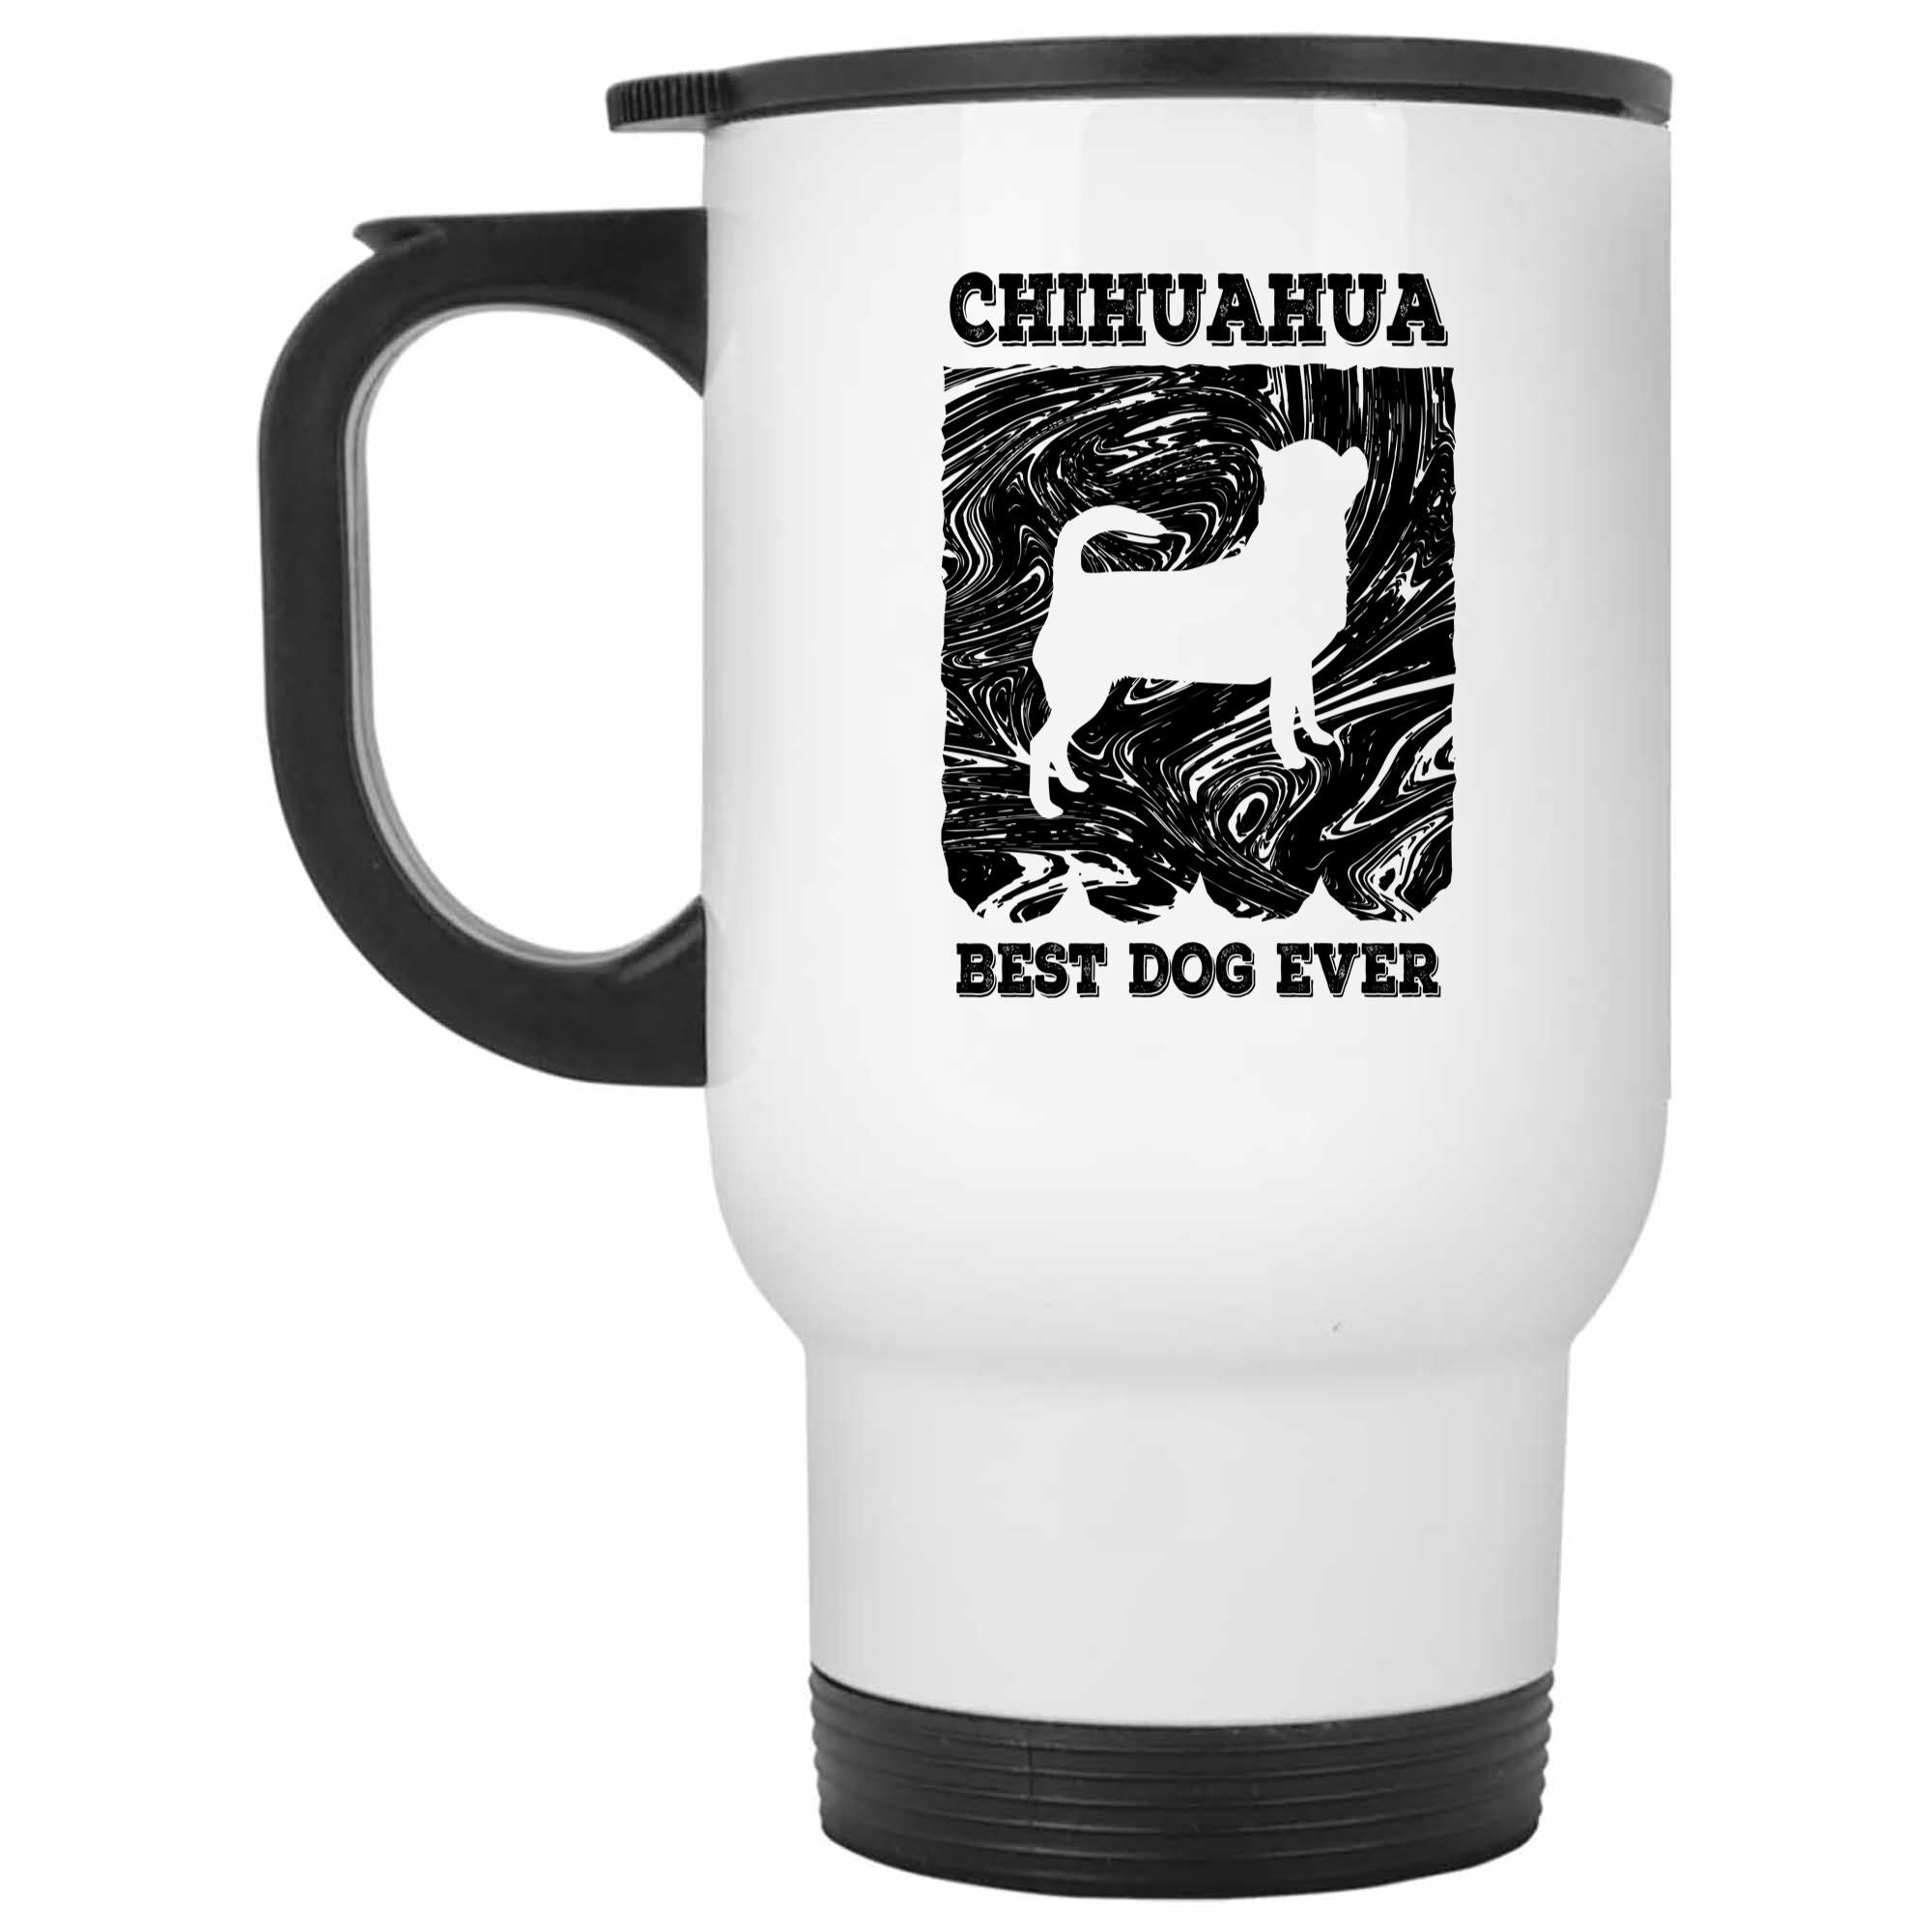 Skitongifts Funny Ceramic Novelty Coffee Mug Chihuahua Best Dog Ever Vintage For Dog Lover vaWucKv